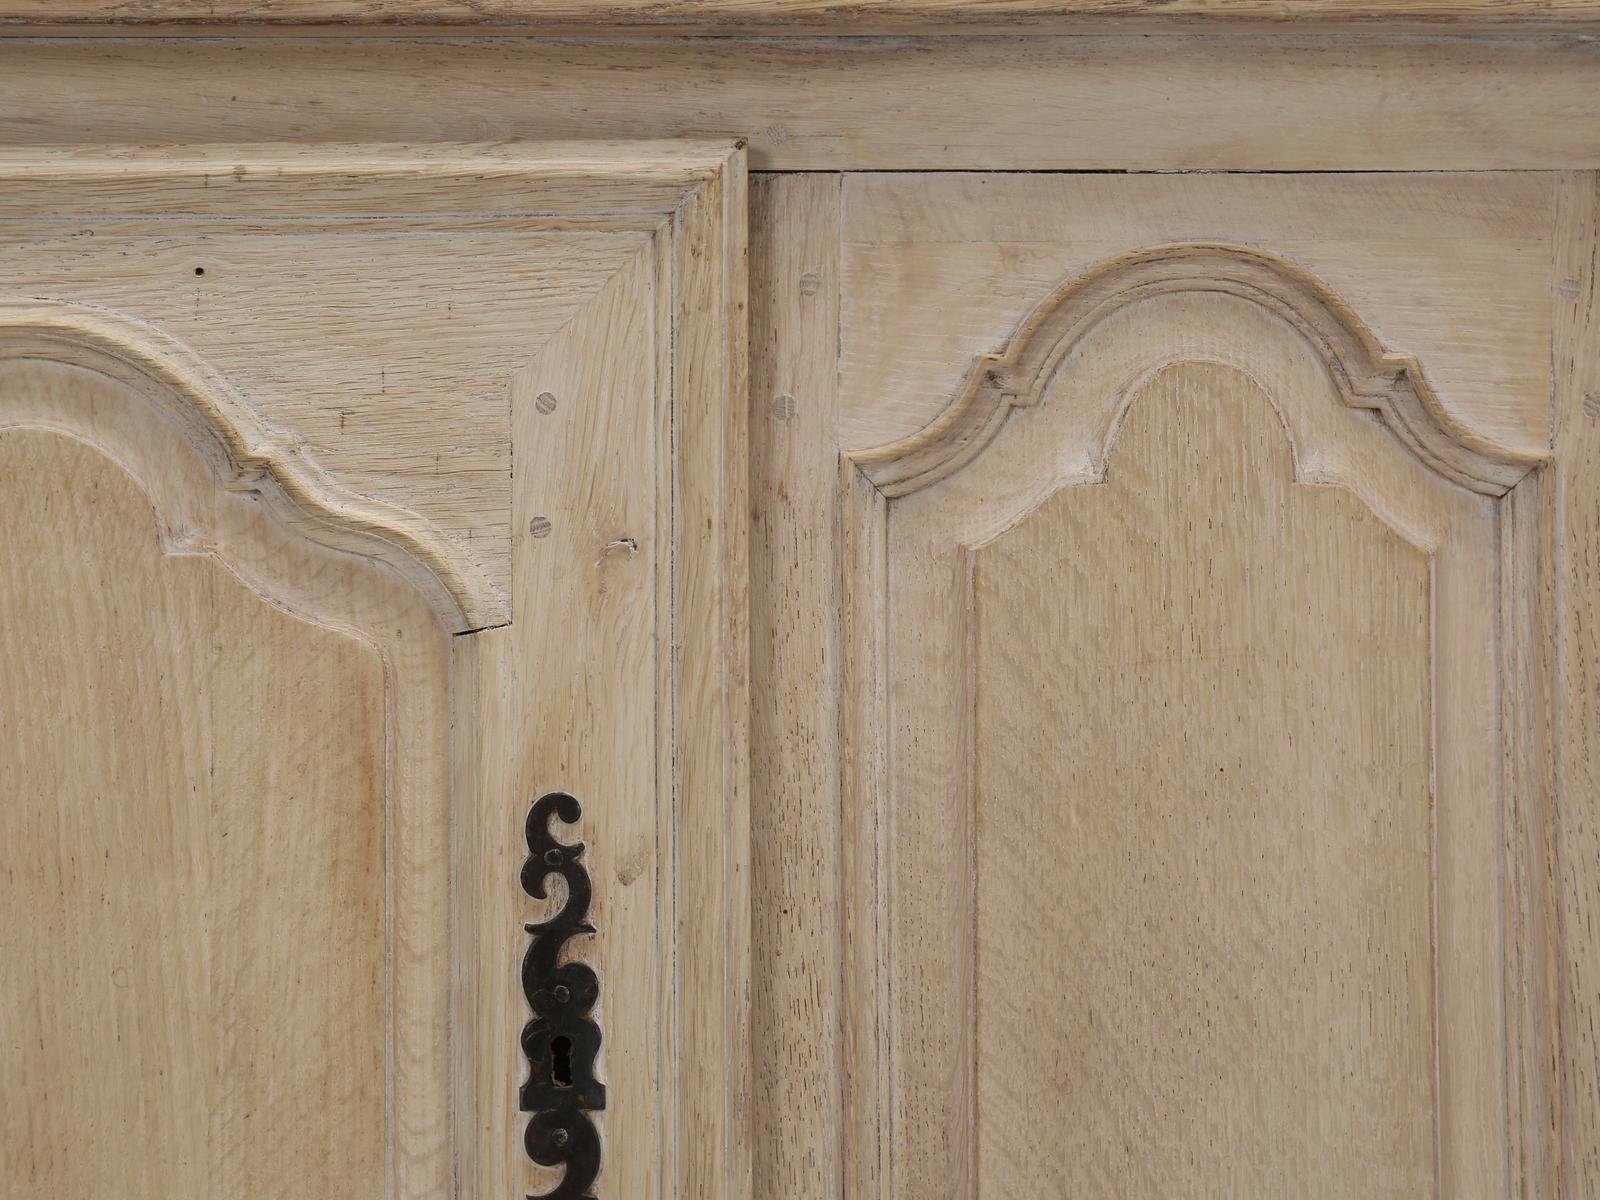 Antique French Bookcase or Cabinet in Limed White Oak Older Restoration c1800's For Sale 3